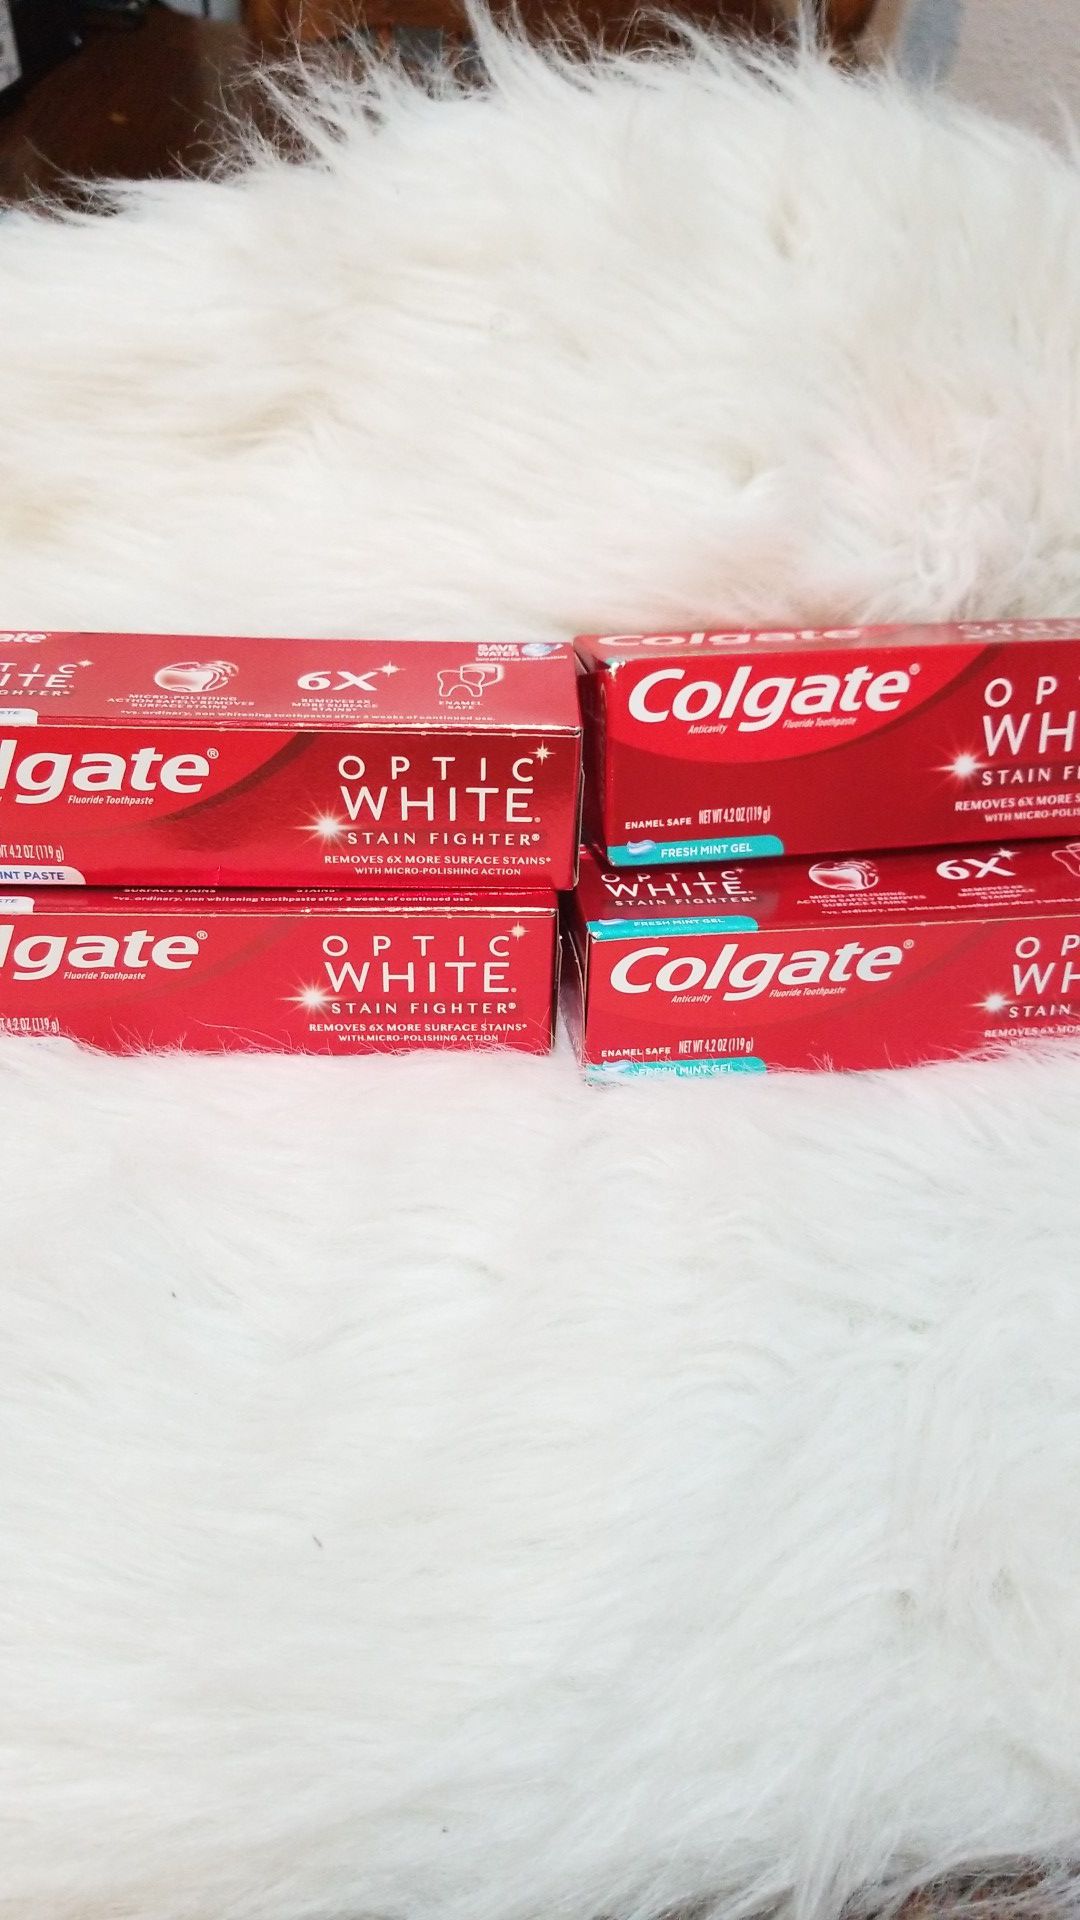 Colgate Optic white